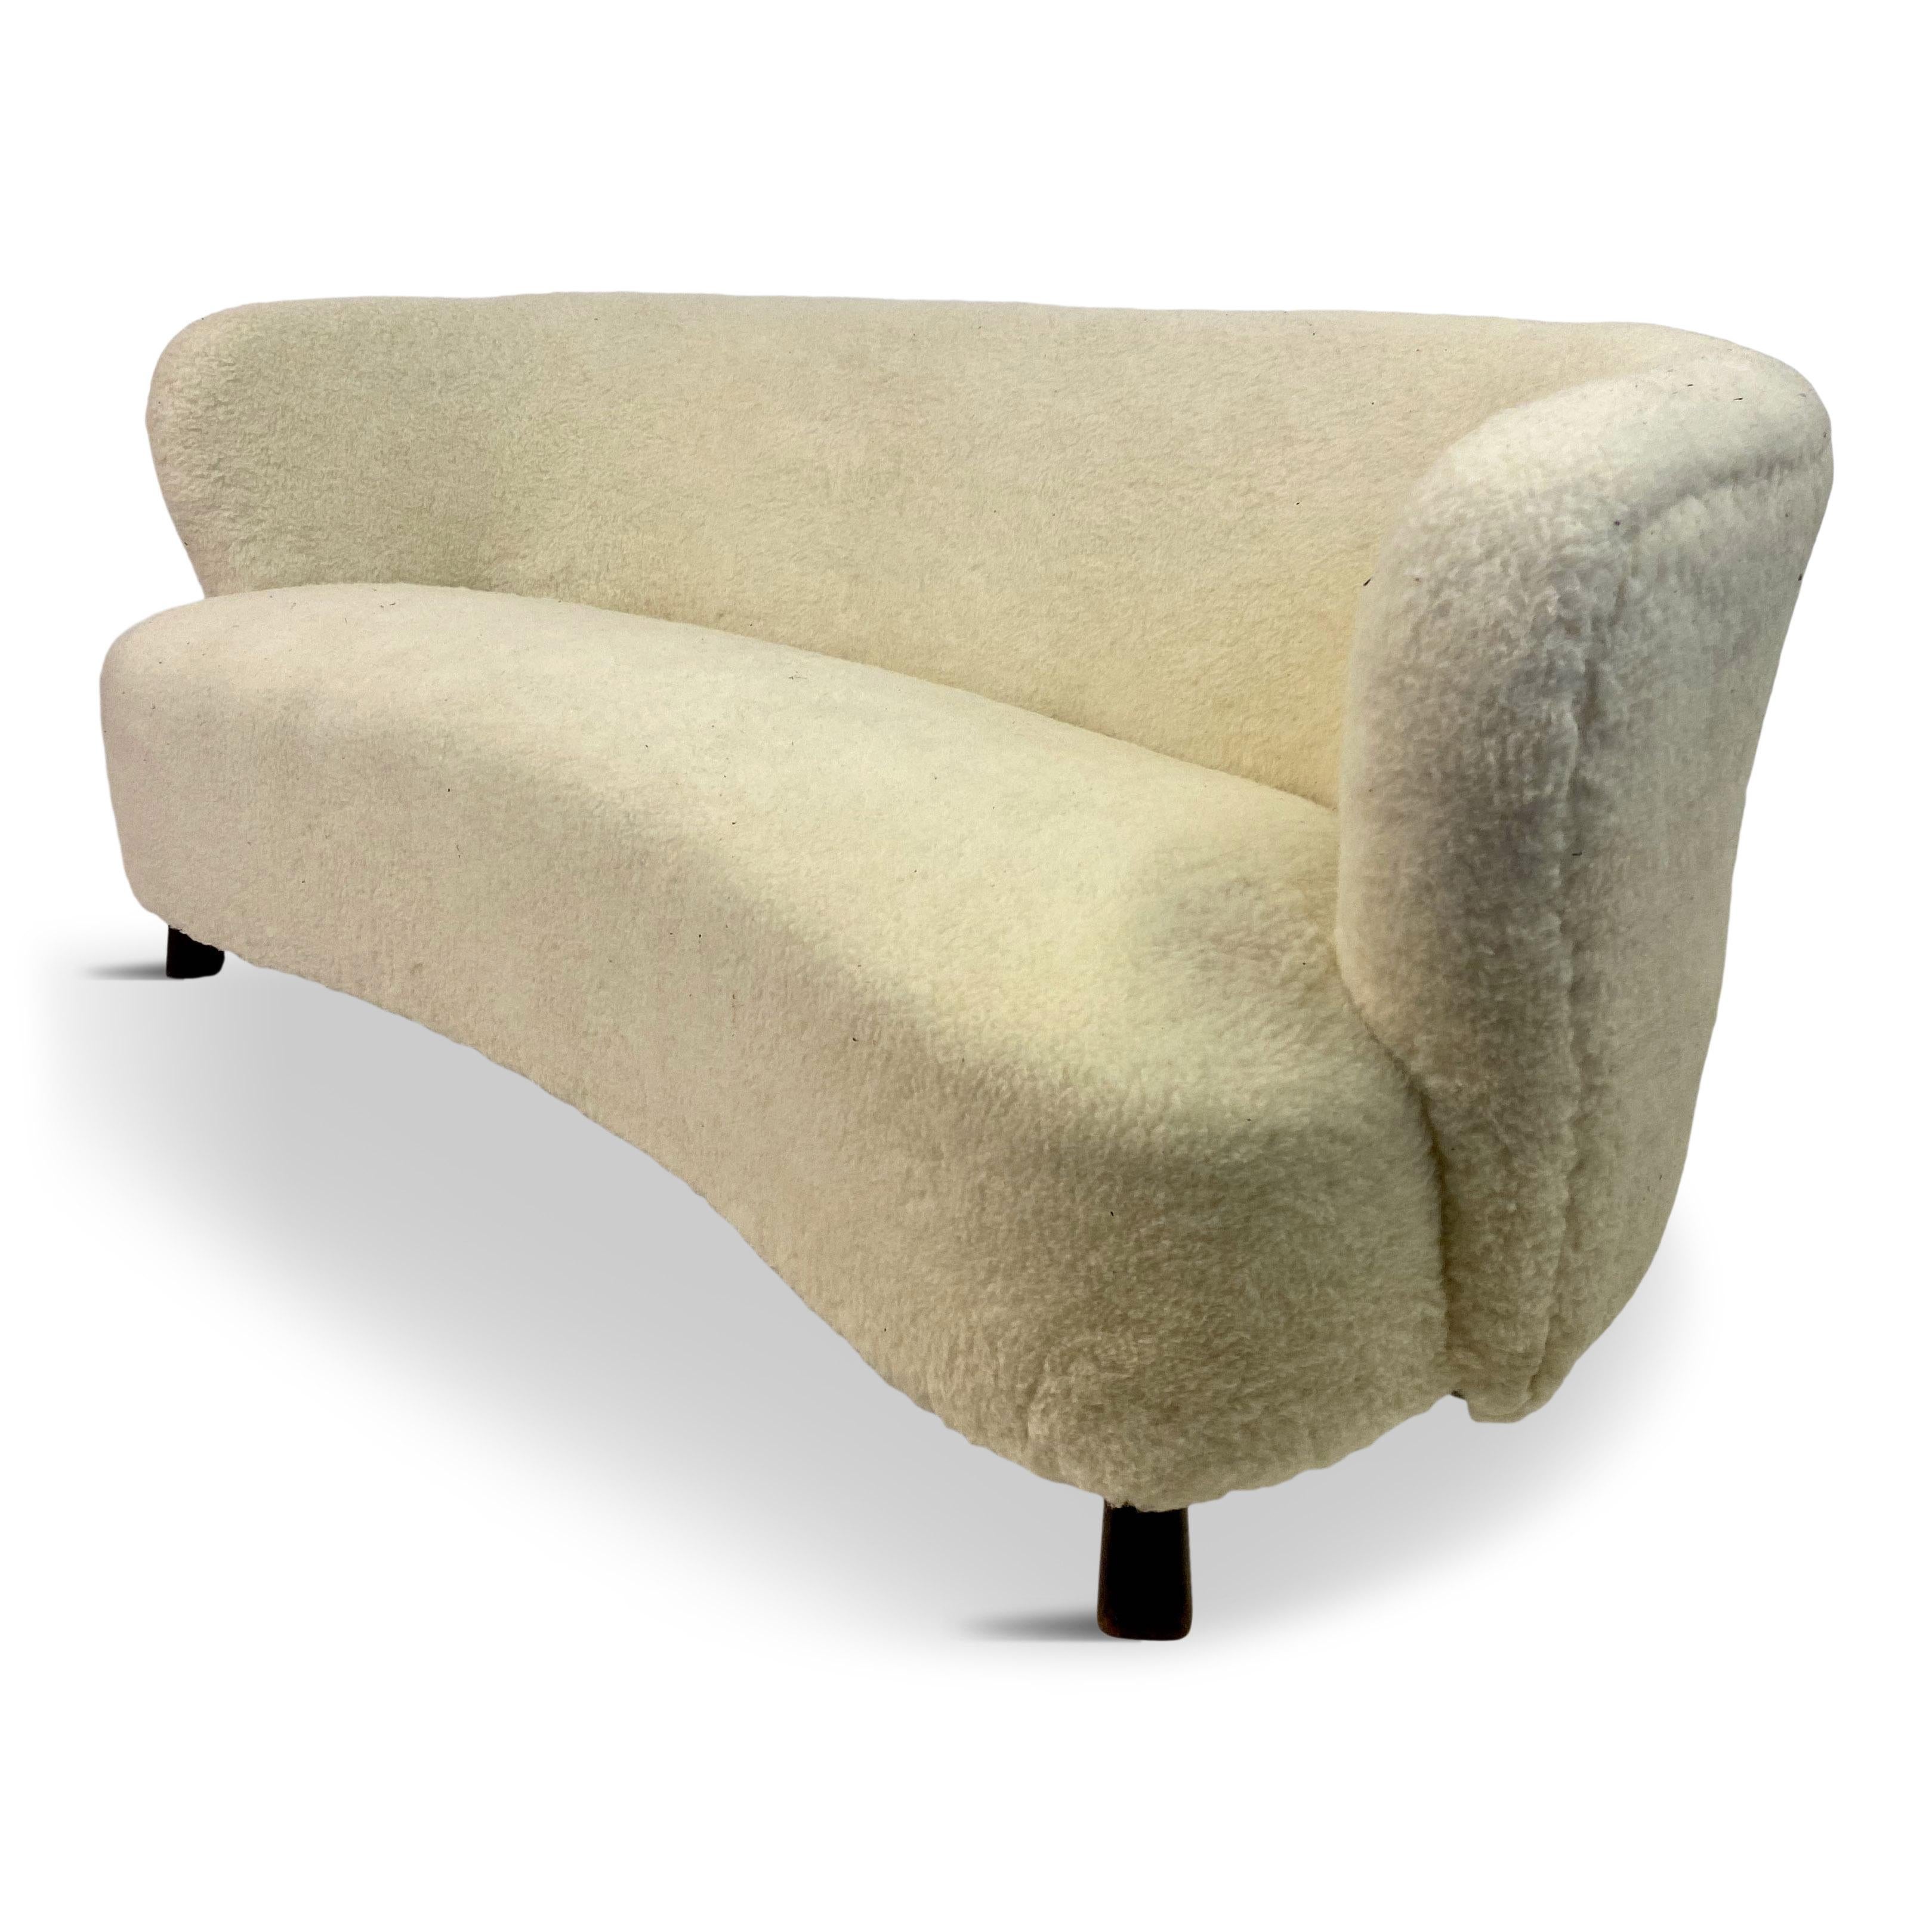 20th Century Midcentury 1940s Curved Danish Sofa in Lambs Wool